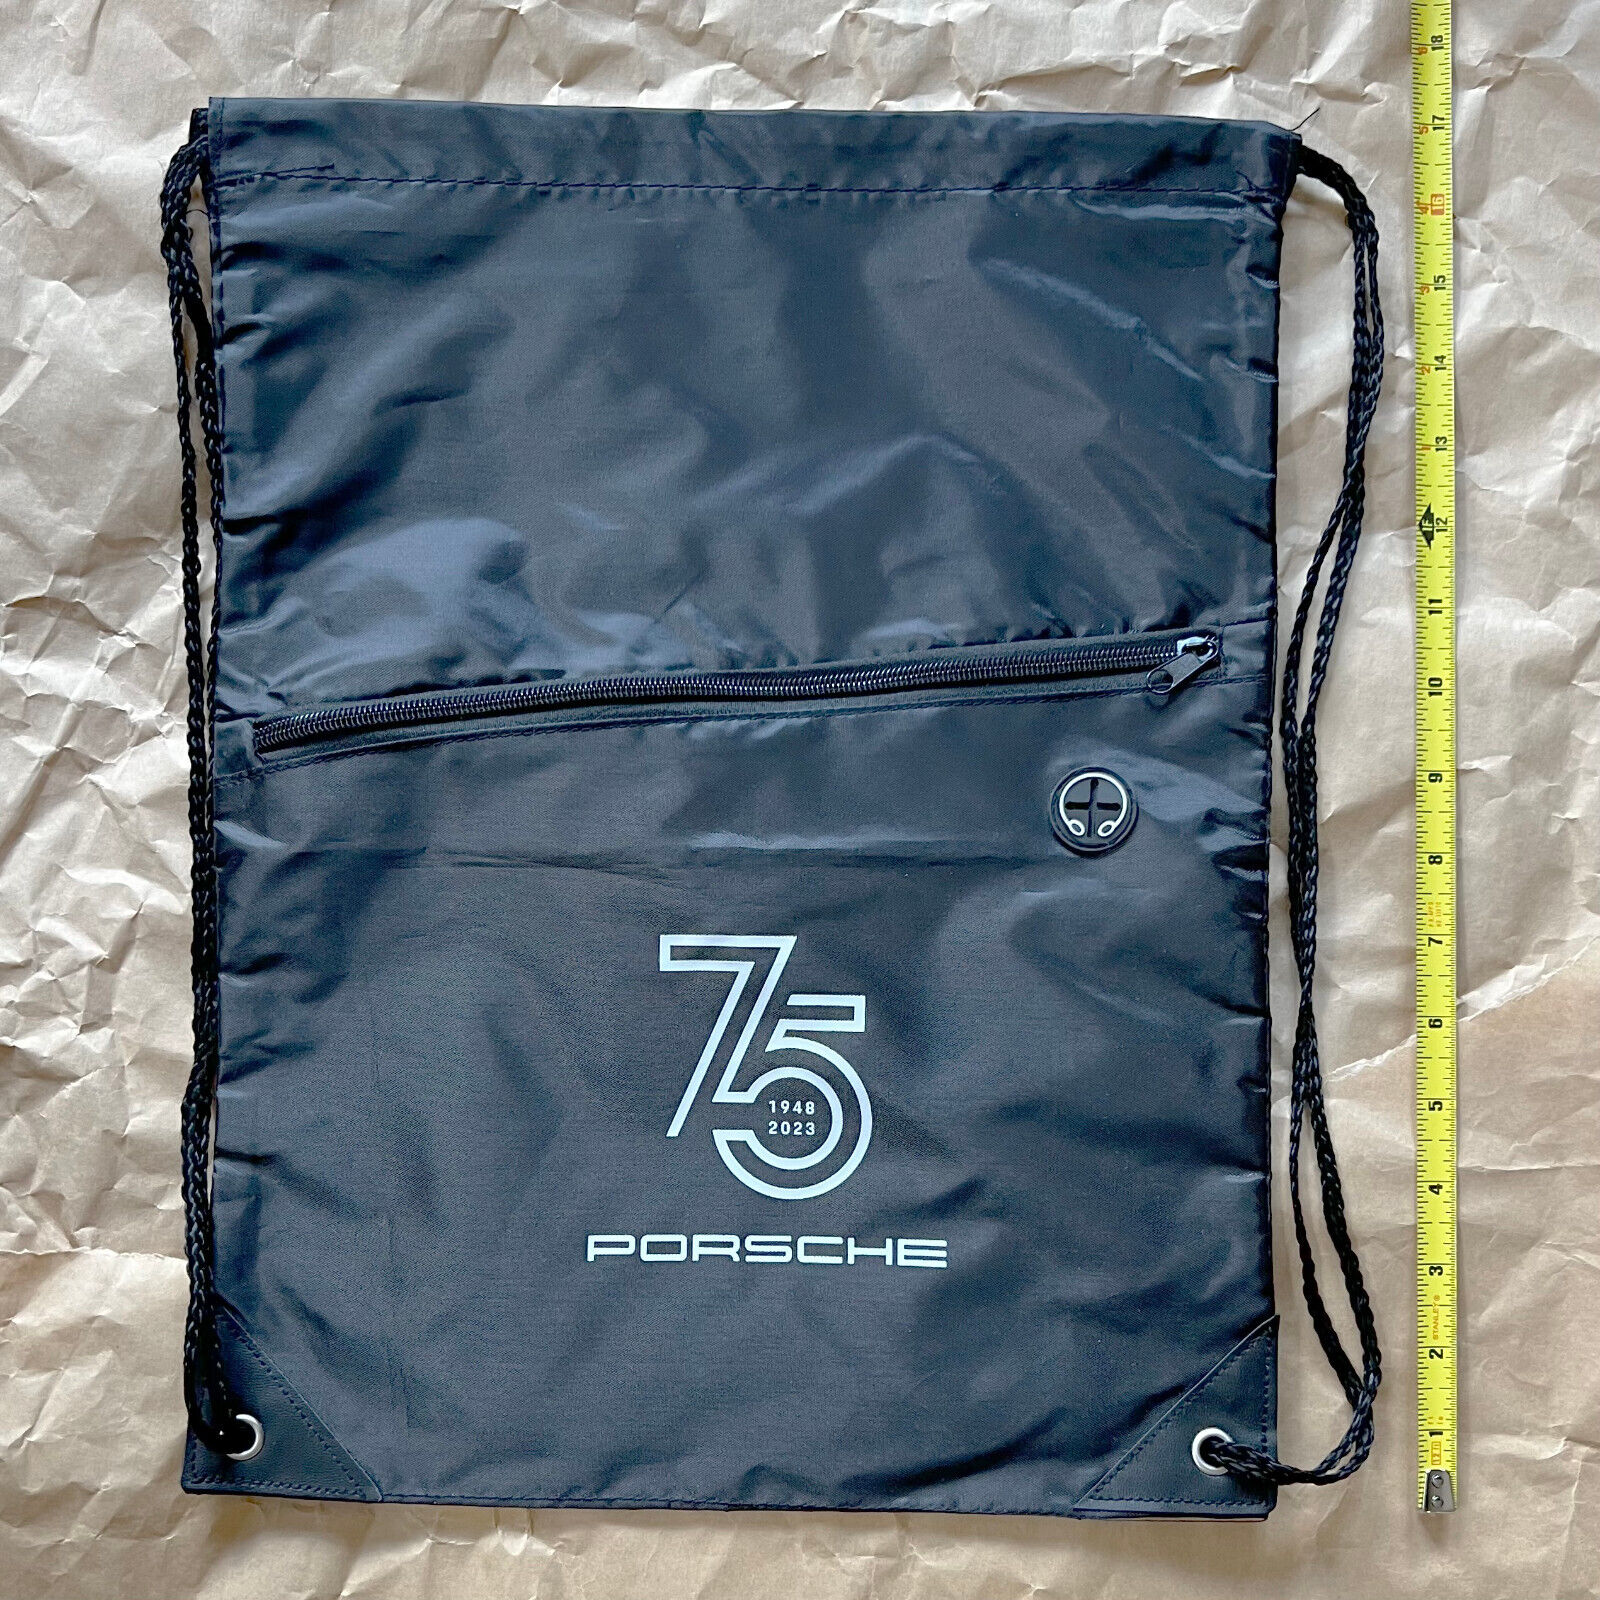 Porsche 75 anniversary string bag backpack, NEW